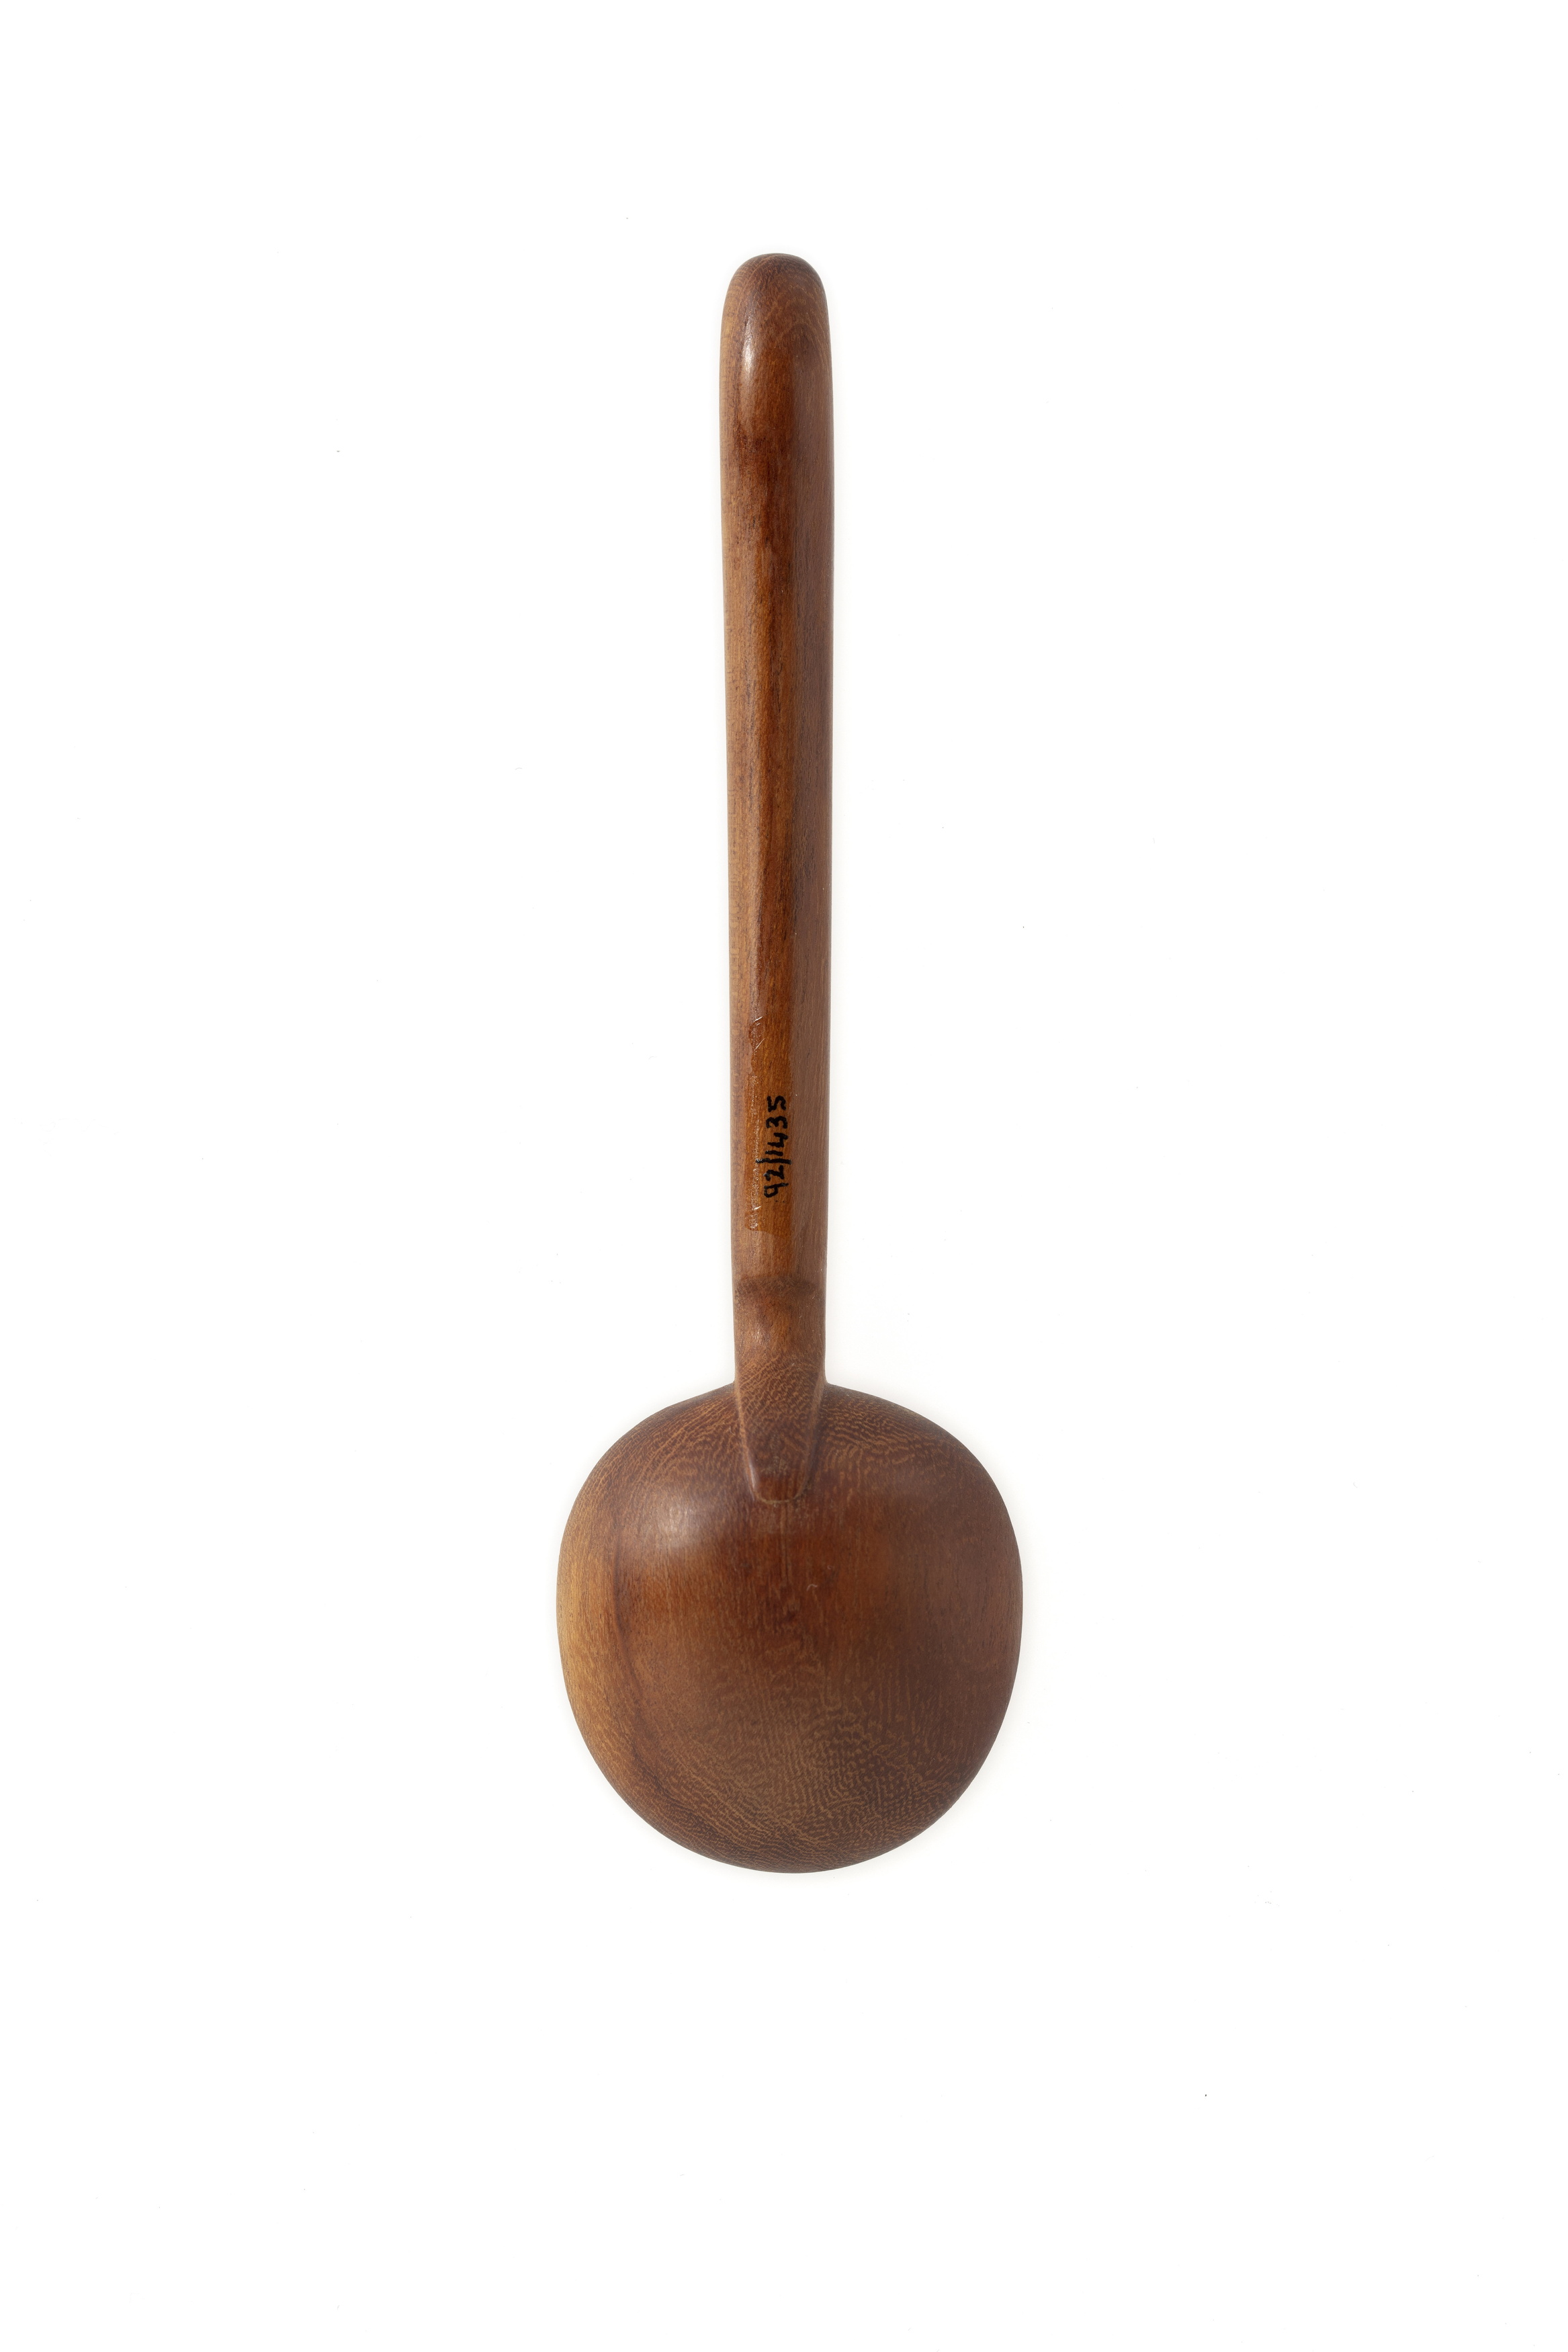 Wooden spoon by Levi Borgstrom